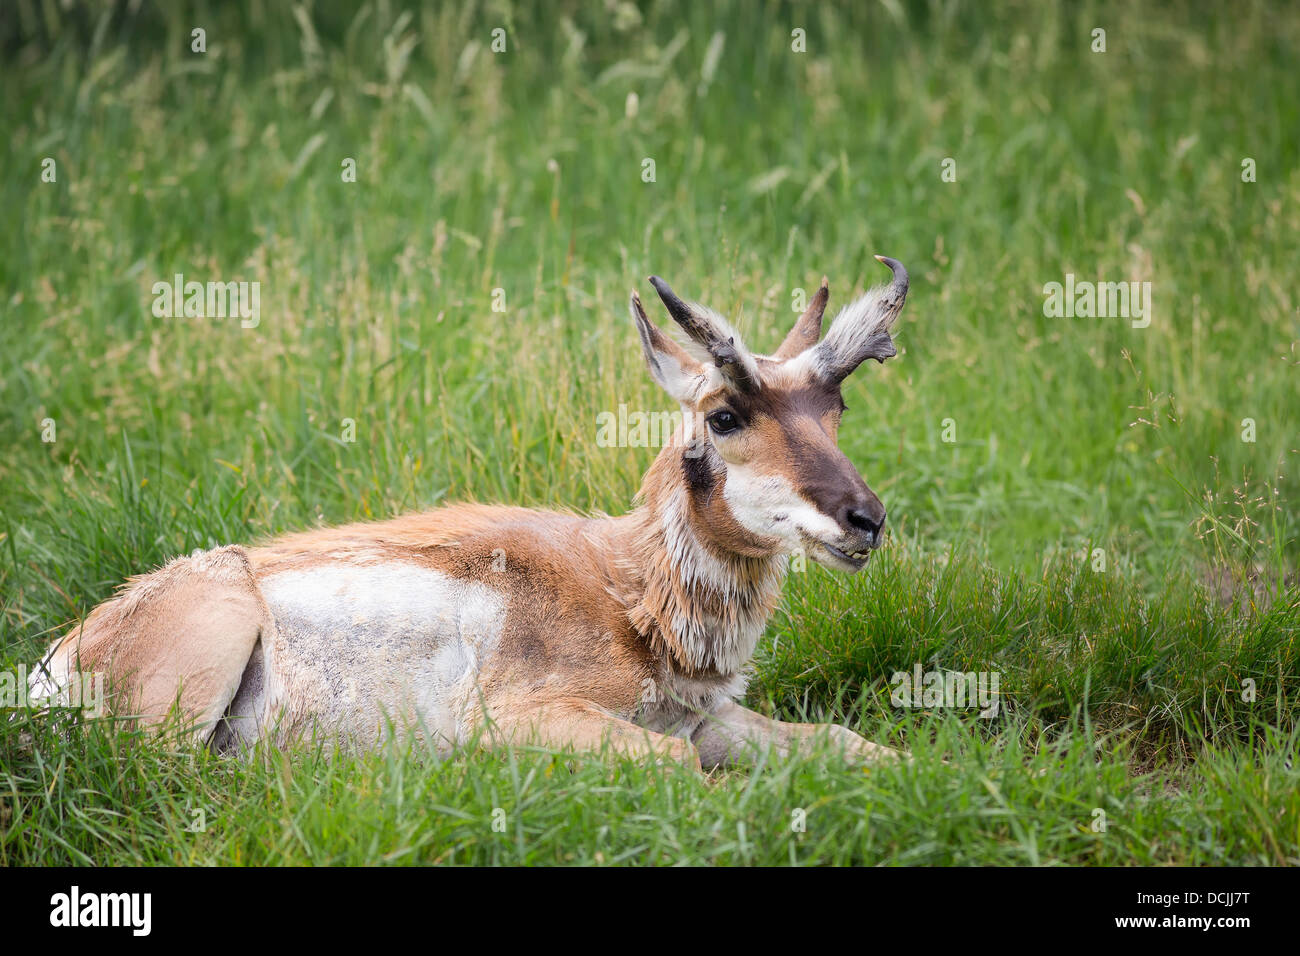 Pronghorn Antelope lying on grass Stock Photo